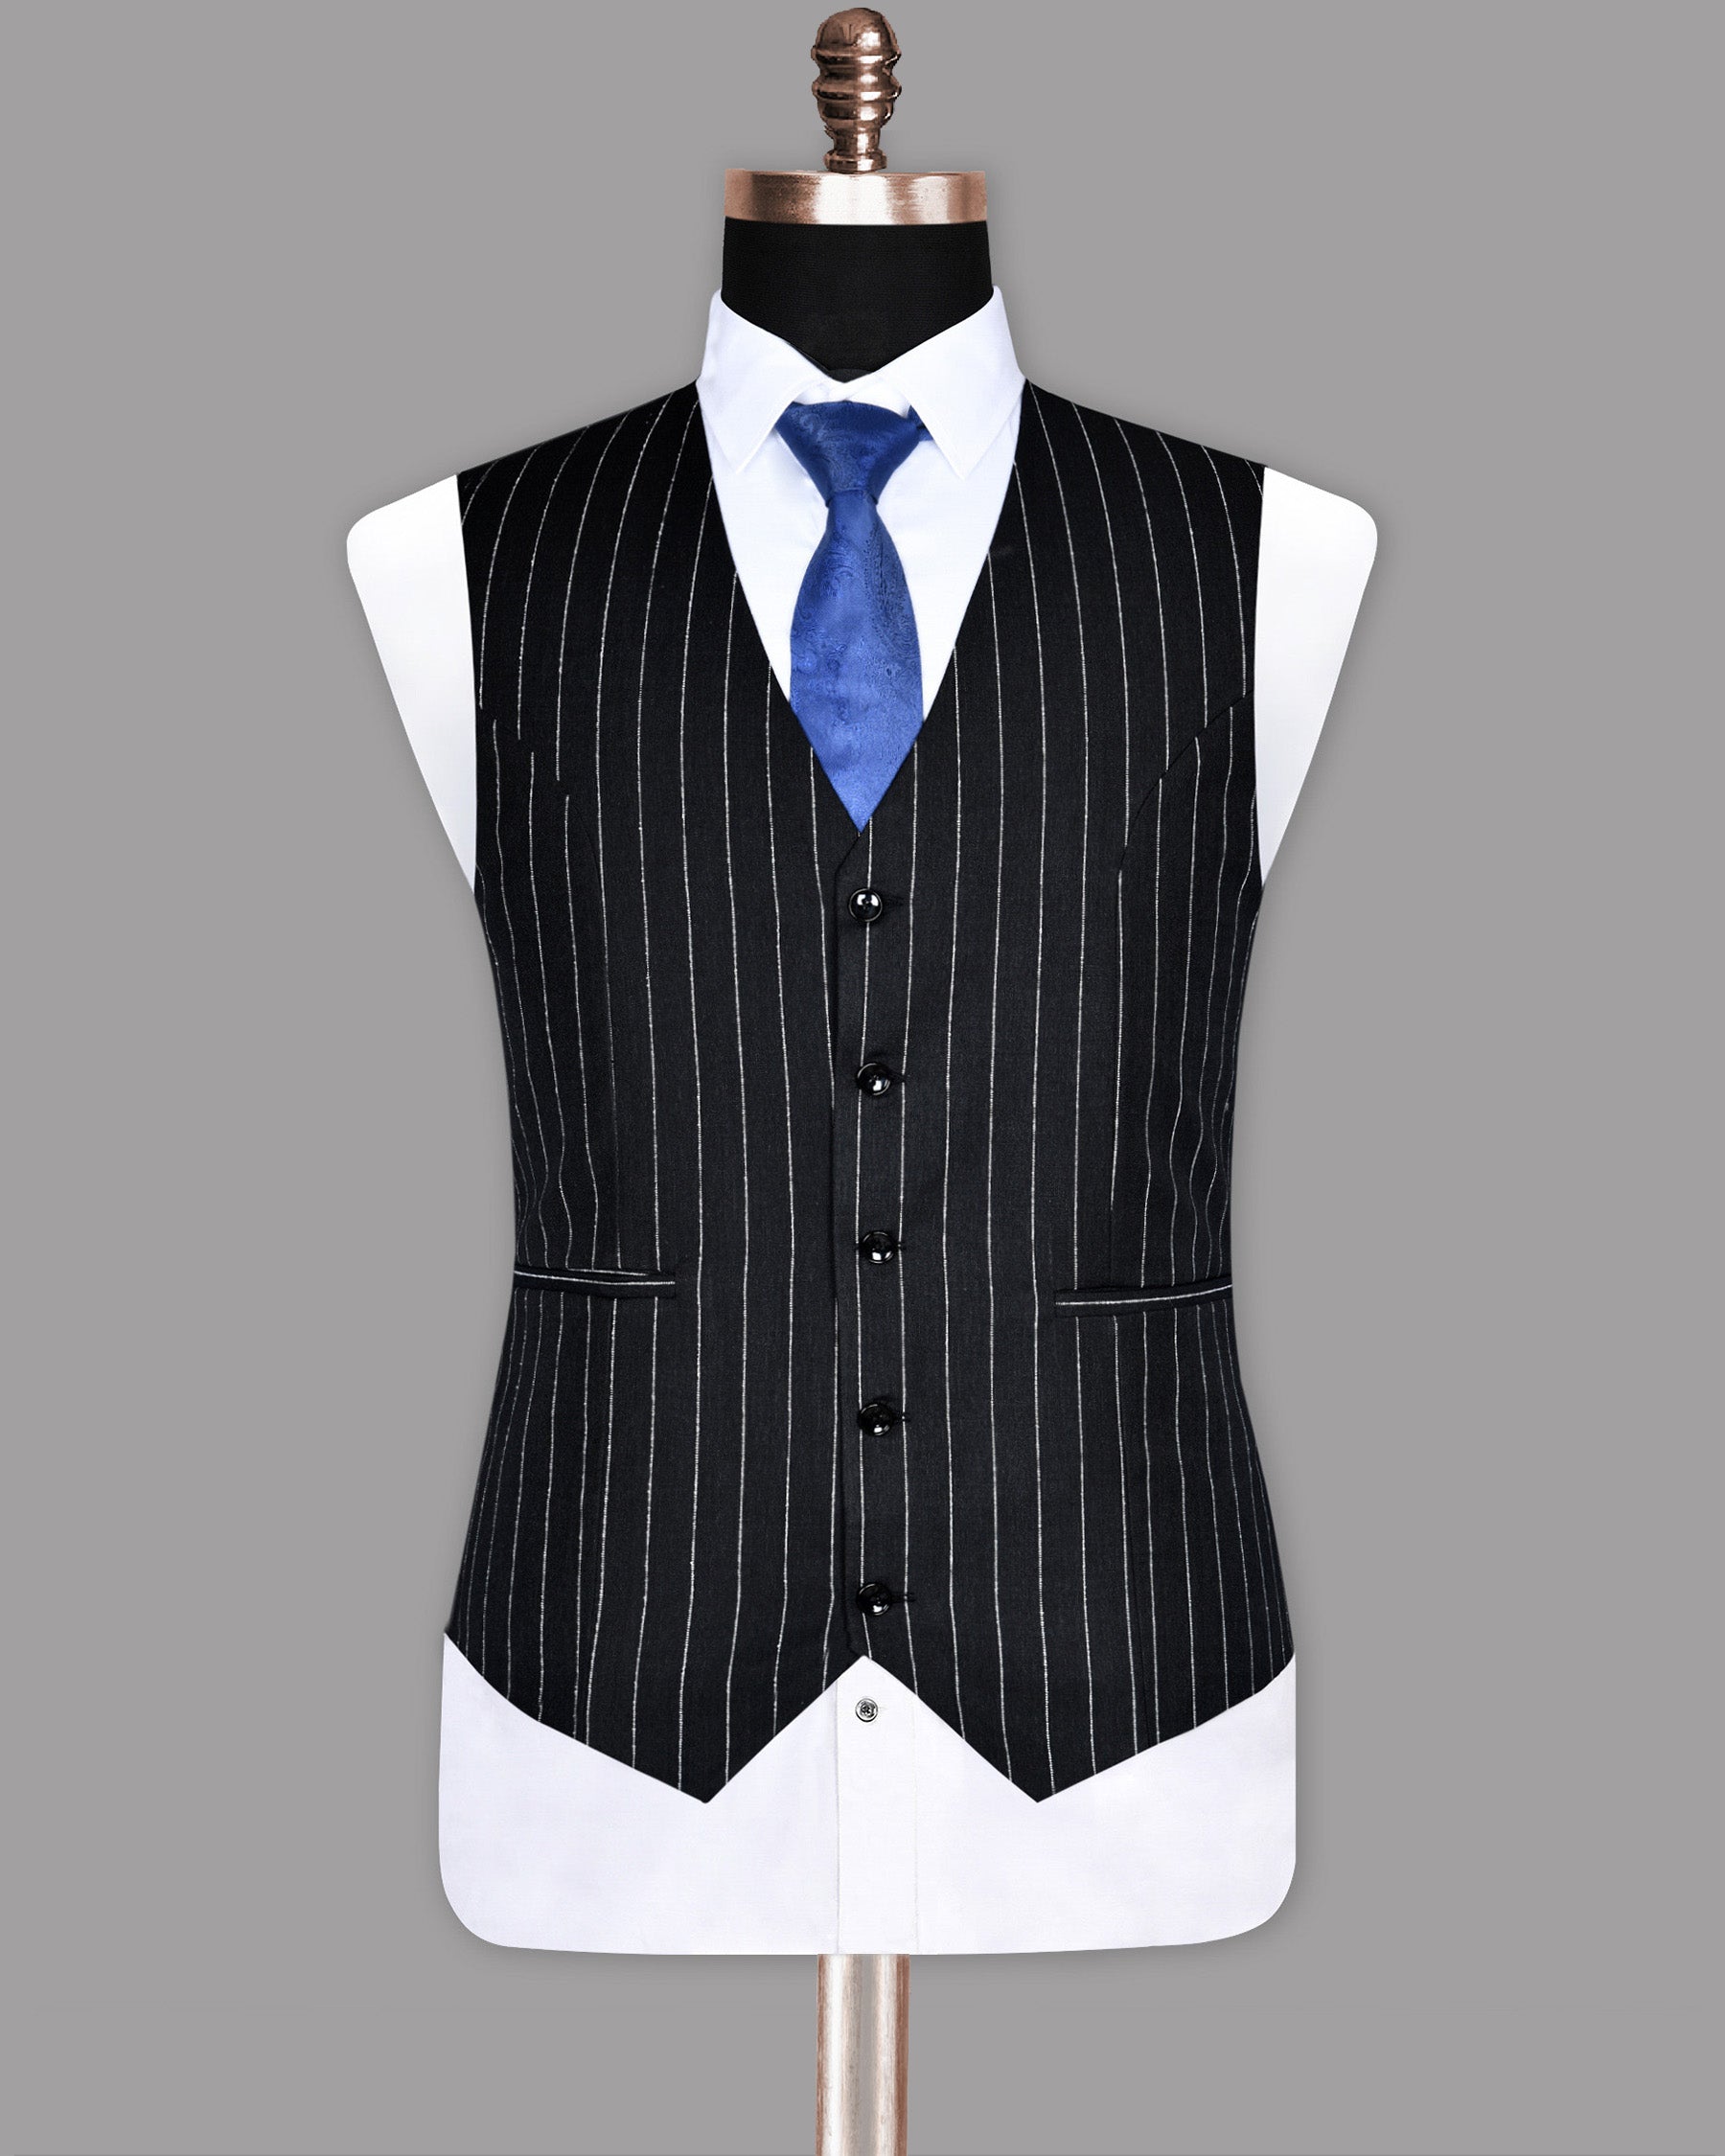 Jade Black Striped Wool Waistcoat V185-46, V185-50, V185-52, V185-44, V185-42, V185-54, V185-58, V185-40, V185-36, V185-56, V185-60, V185-48, V185-38